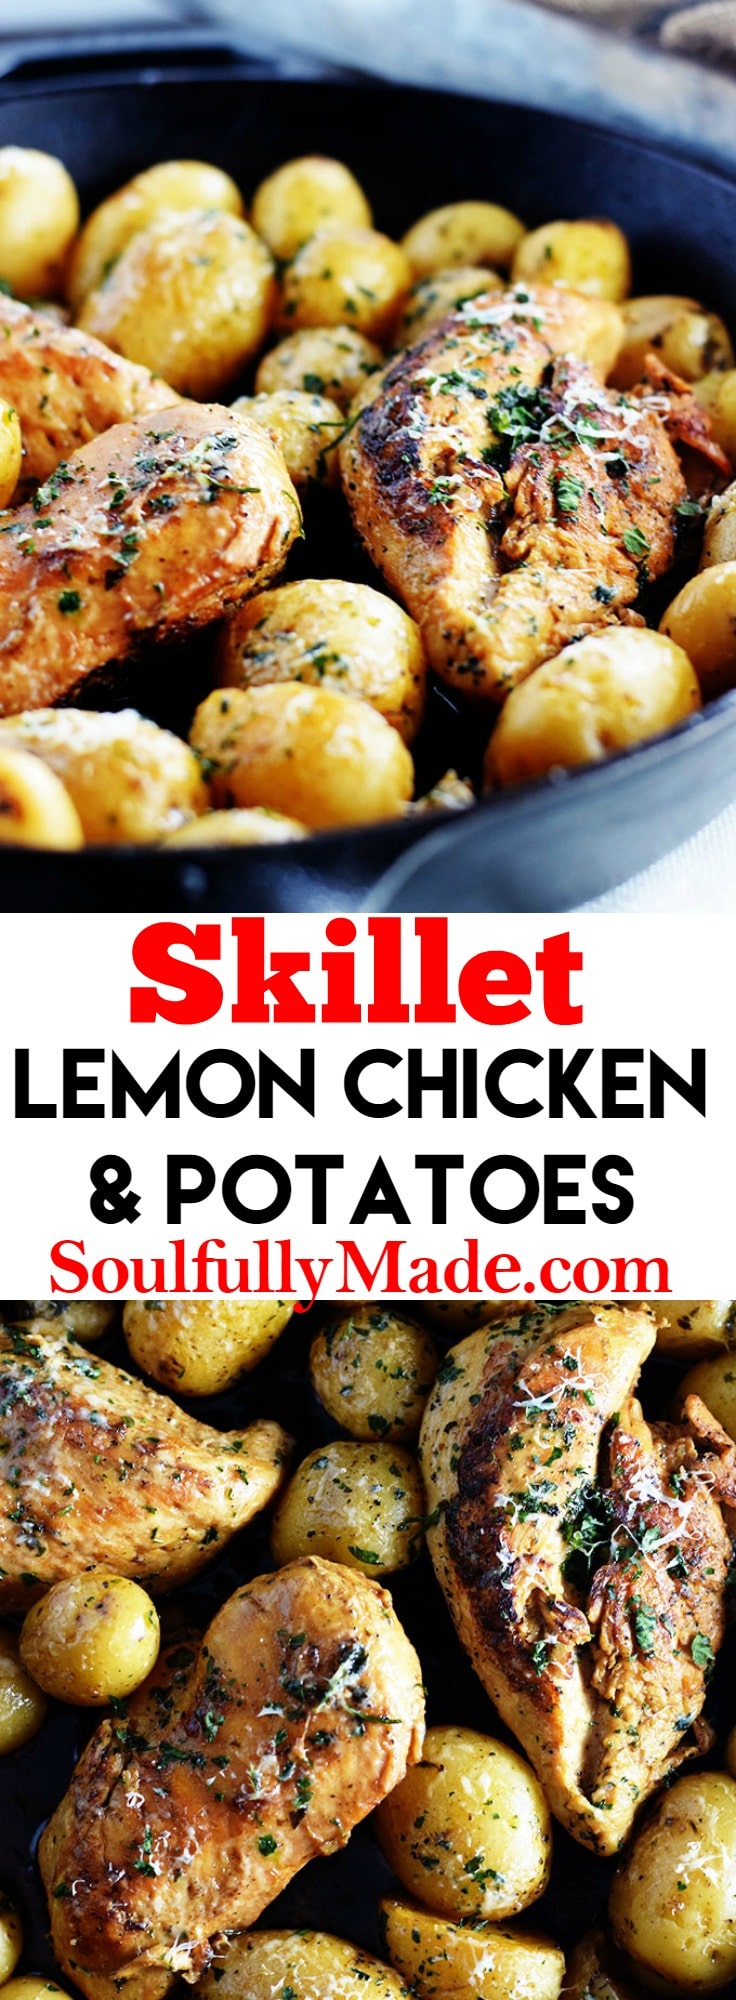 Skillet Lemon Chicken and Potatoes